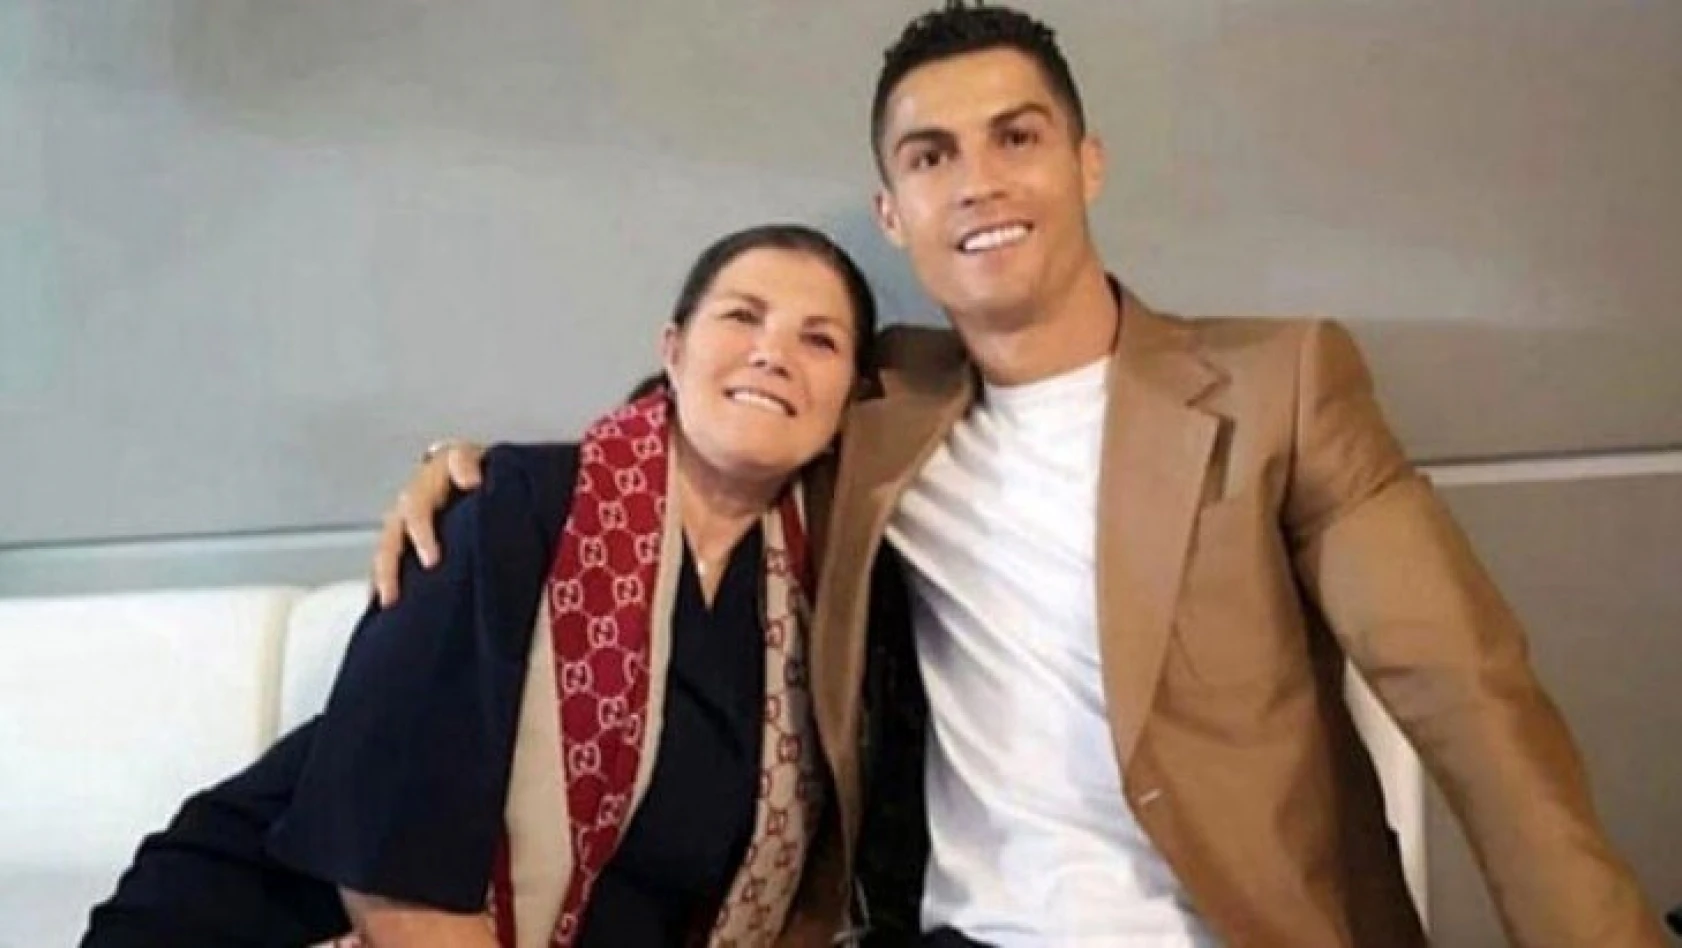 Cristiano Ronaldo'nun annesi felç geçirdi